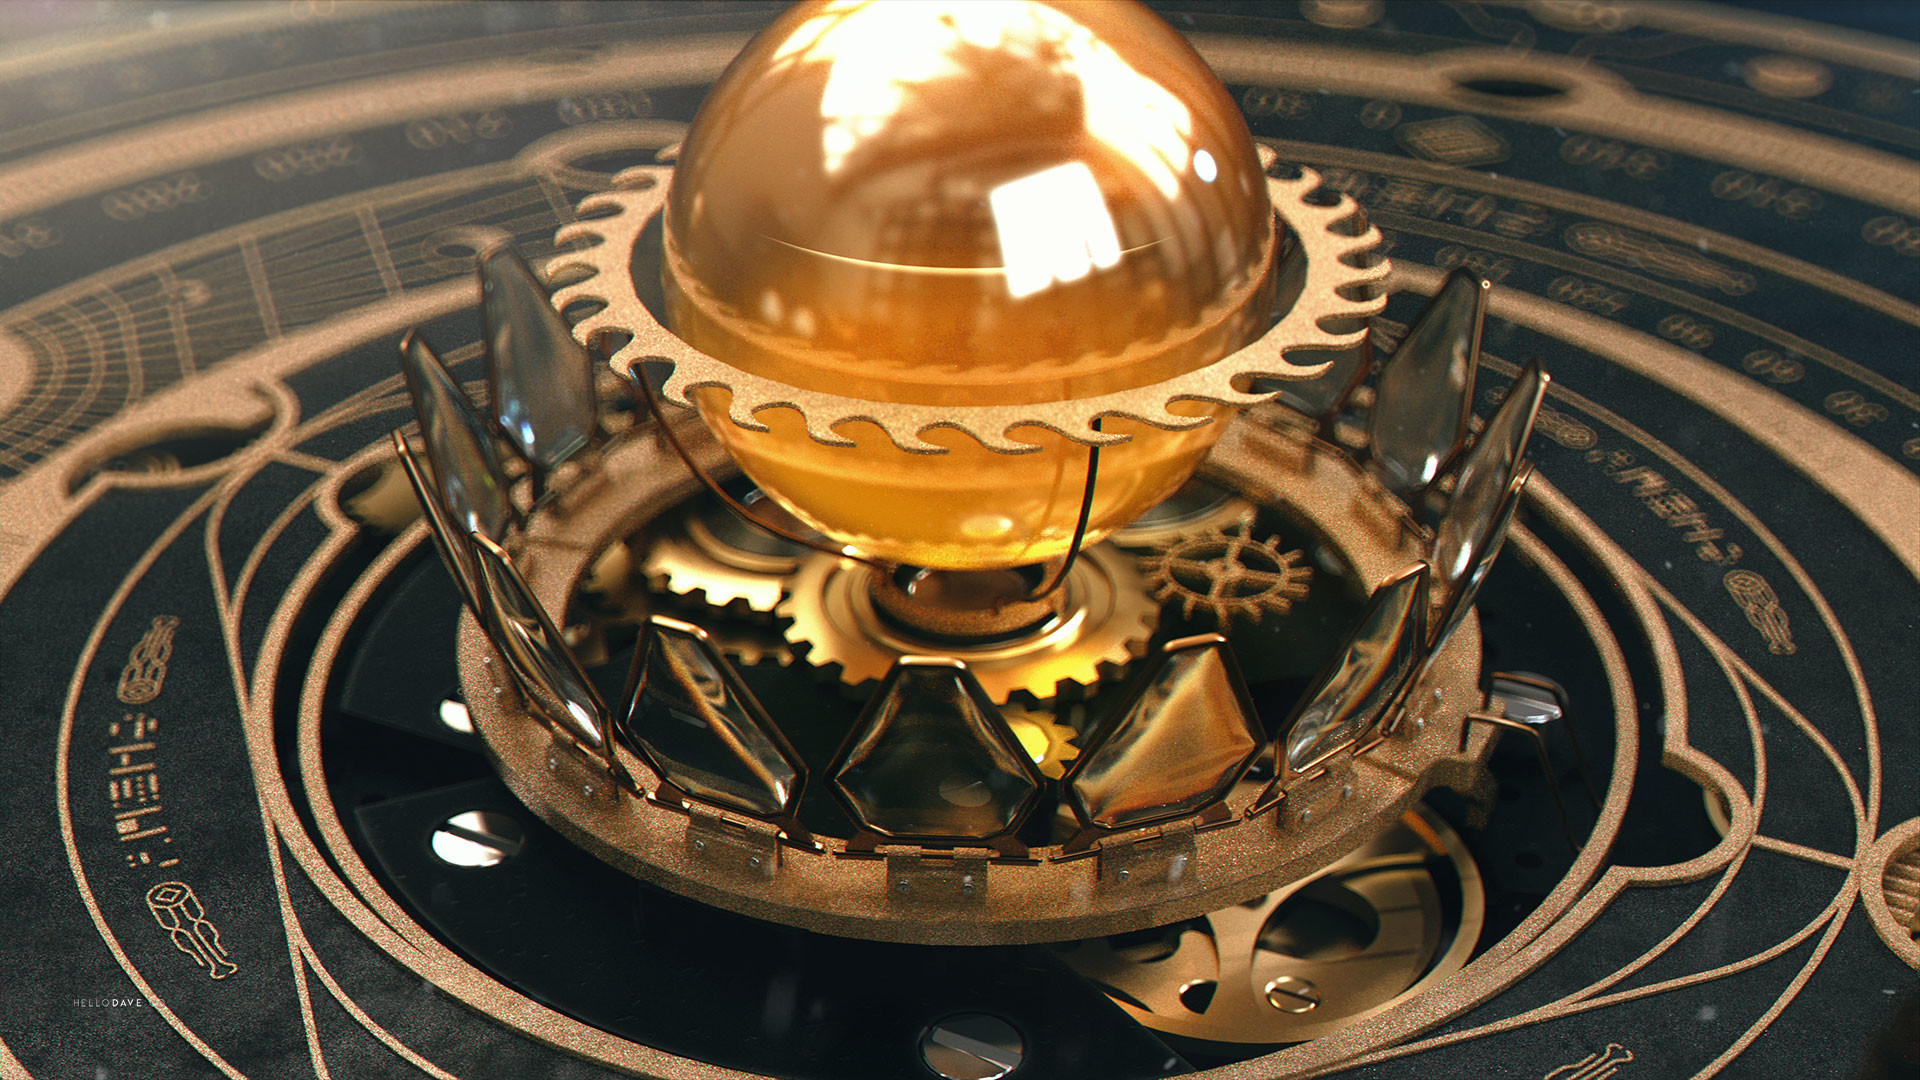 davison-carvalho-steampunk-table-astrolabe-03-fhd.jpg